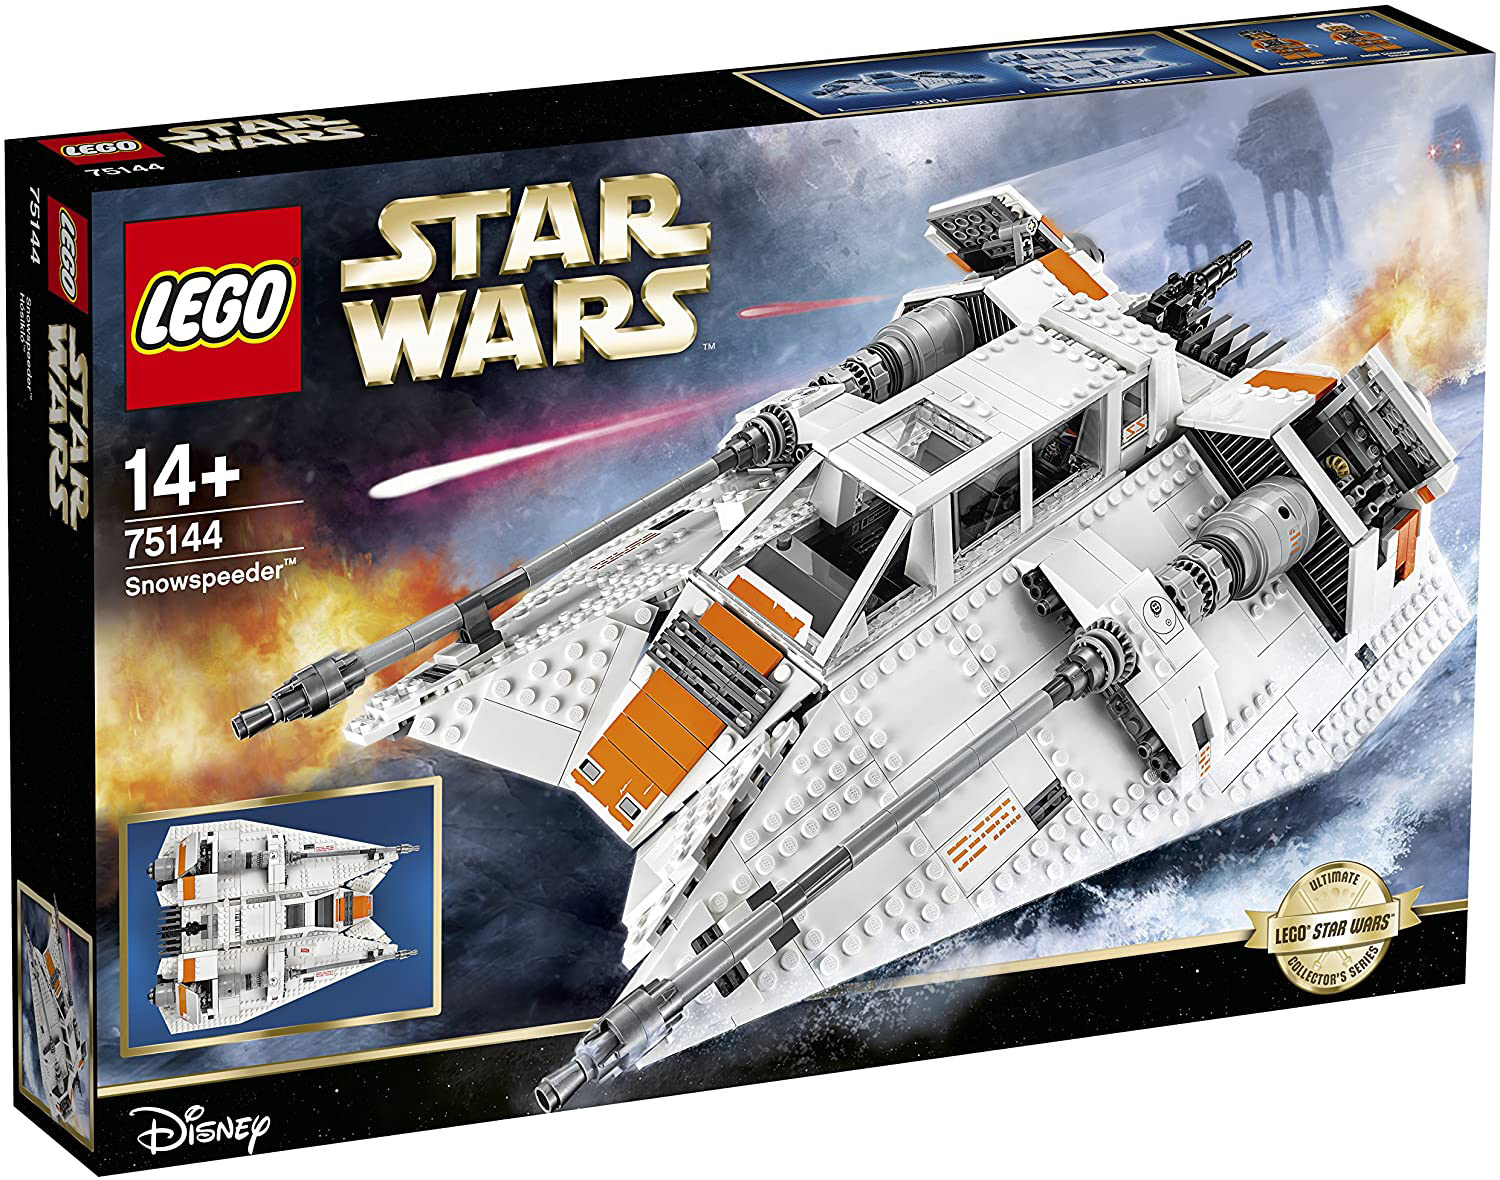 Gamintojo LEGO Star Wars 75144 Snowspeeder™ nuotrauka